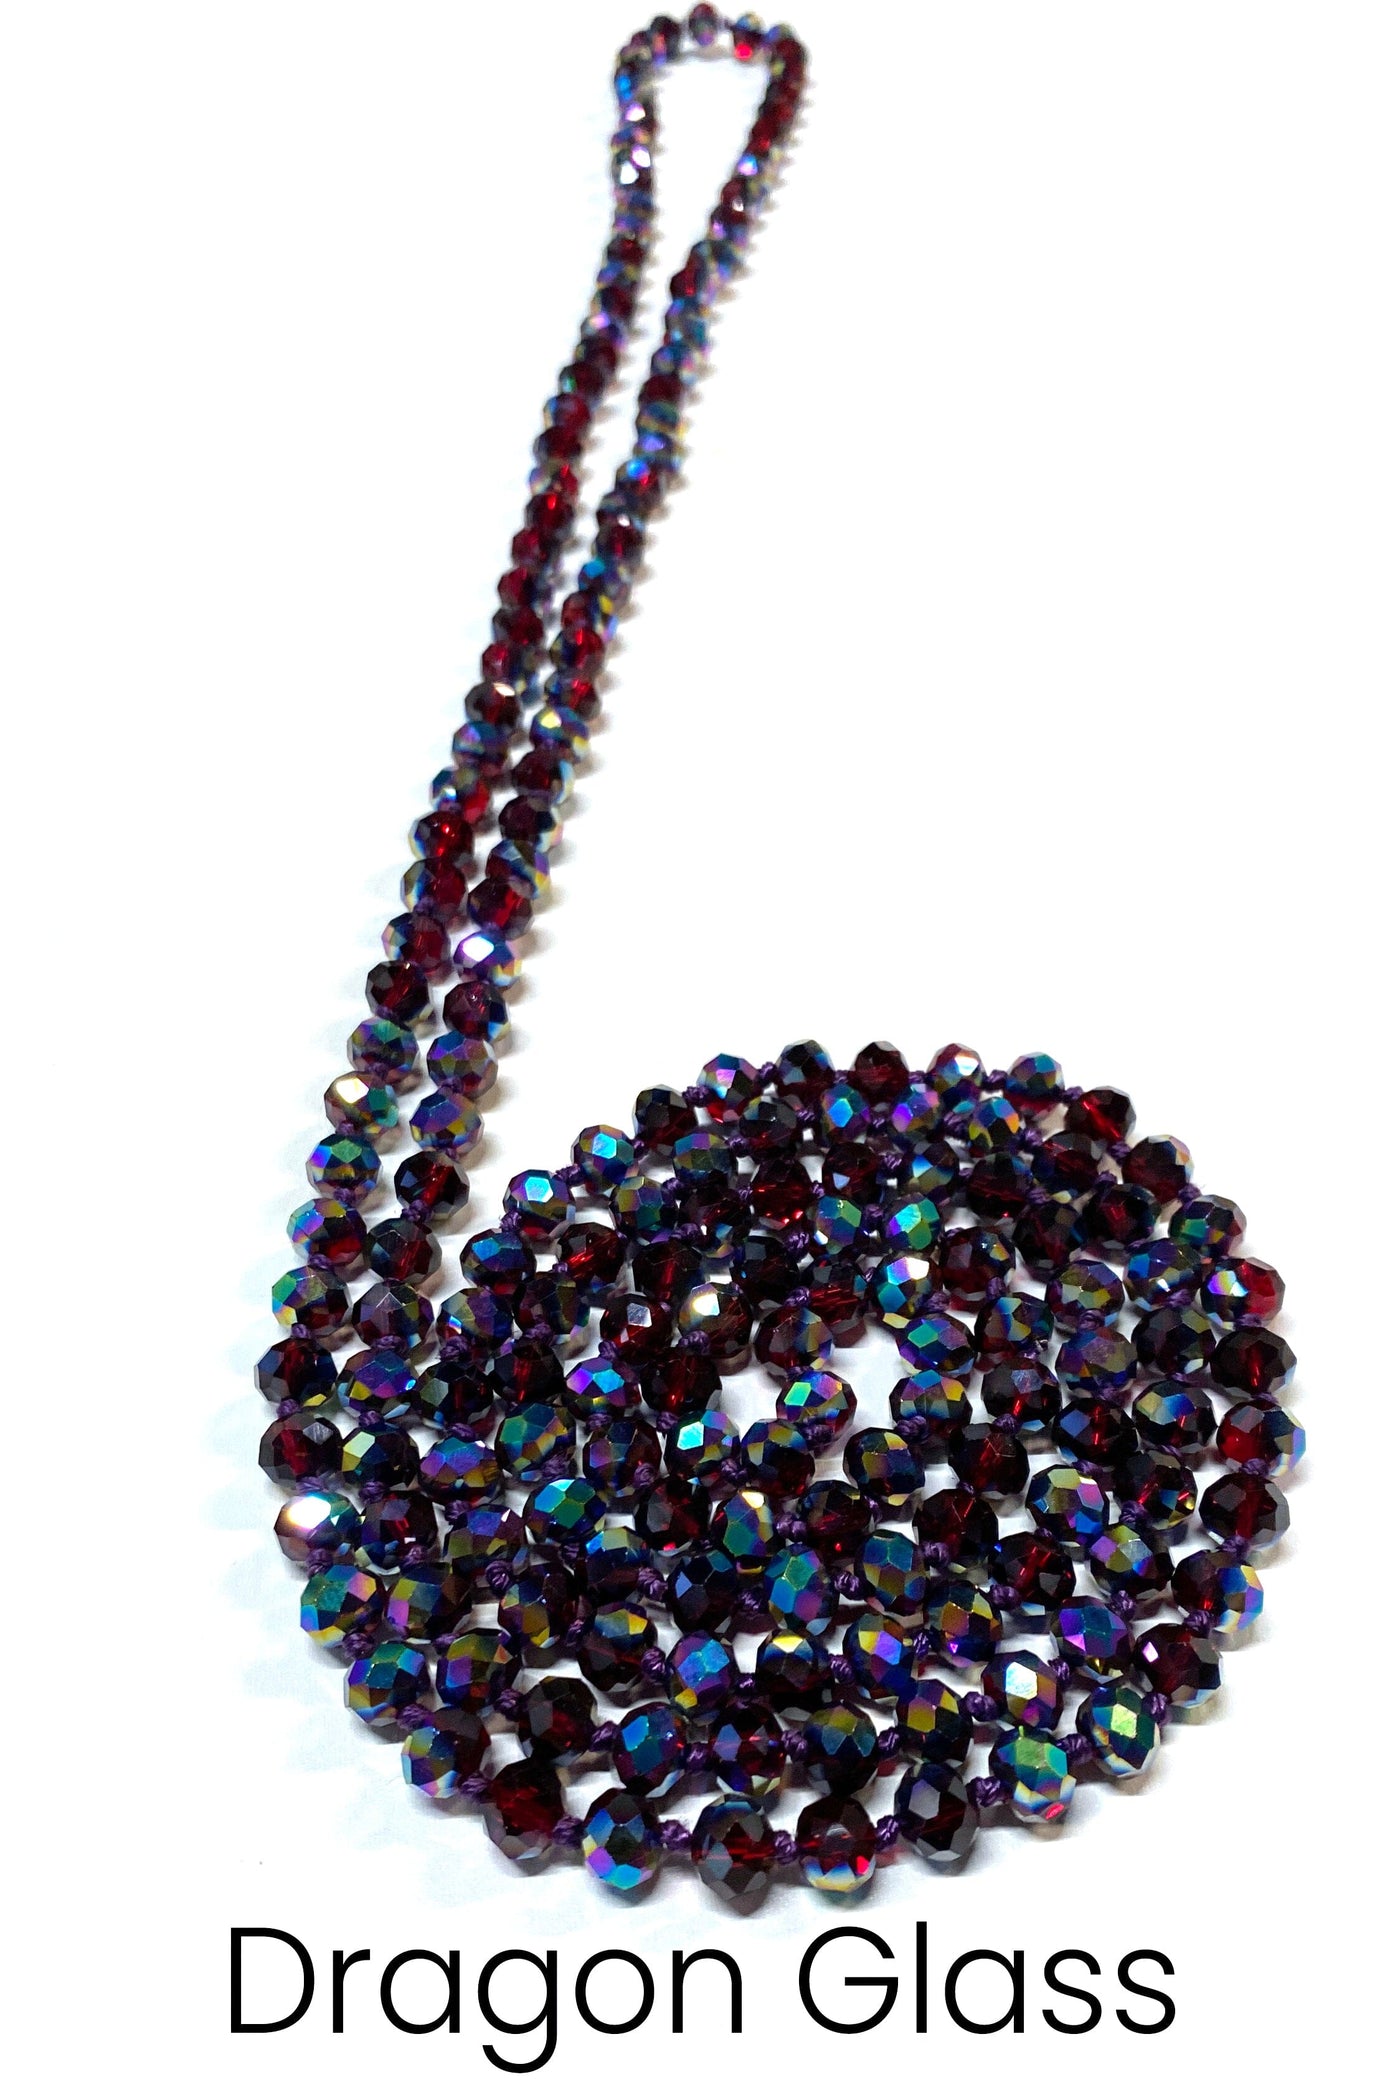 Wrap Necklaces 60" - All Colors jewelry ViVi Liam Jewelry Dragon Glass 